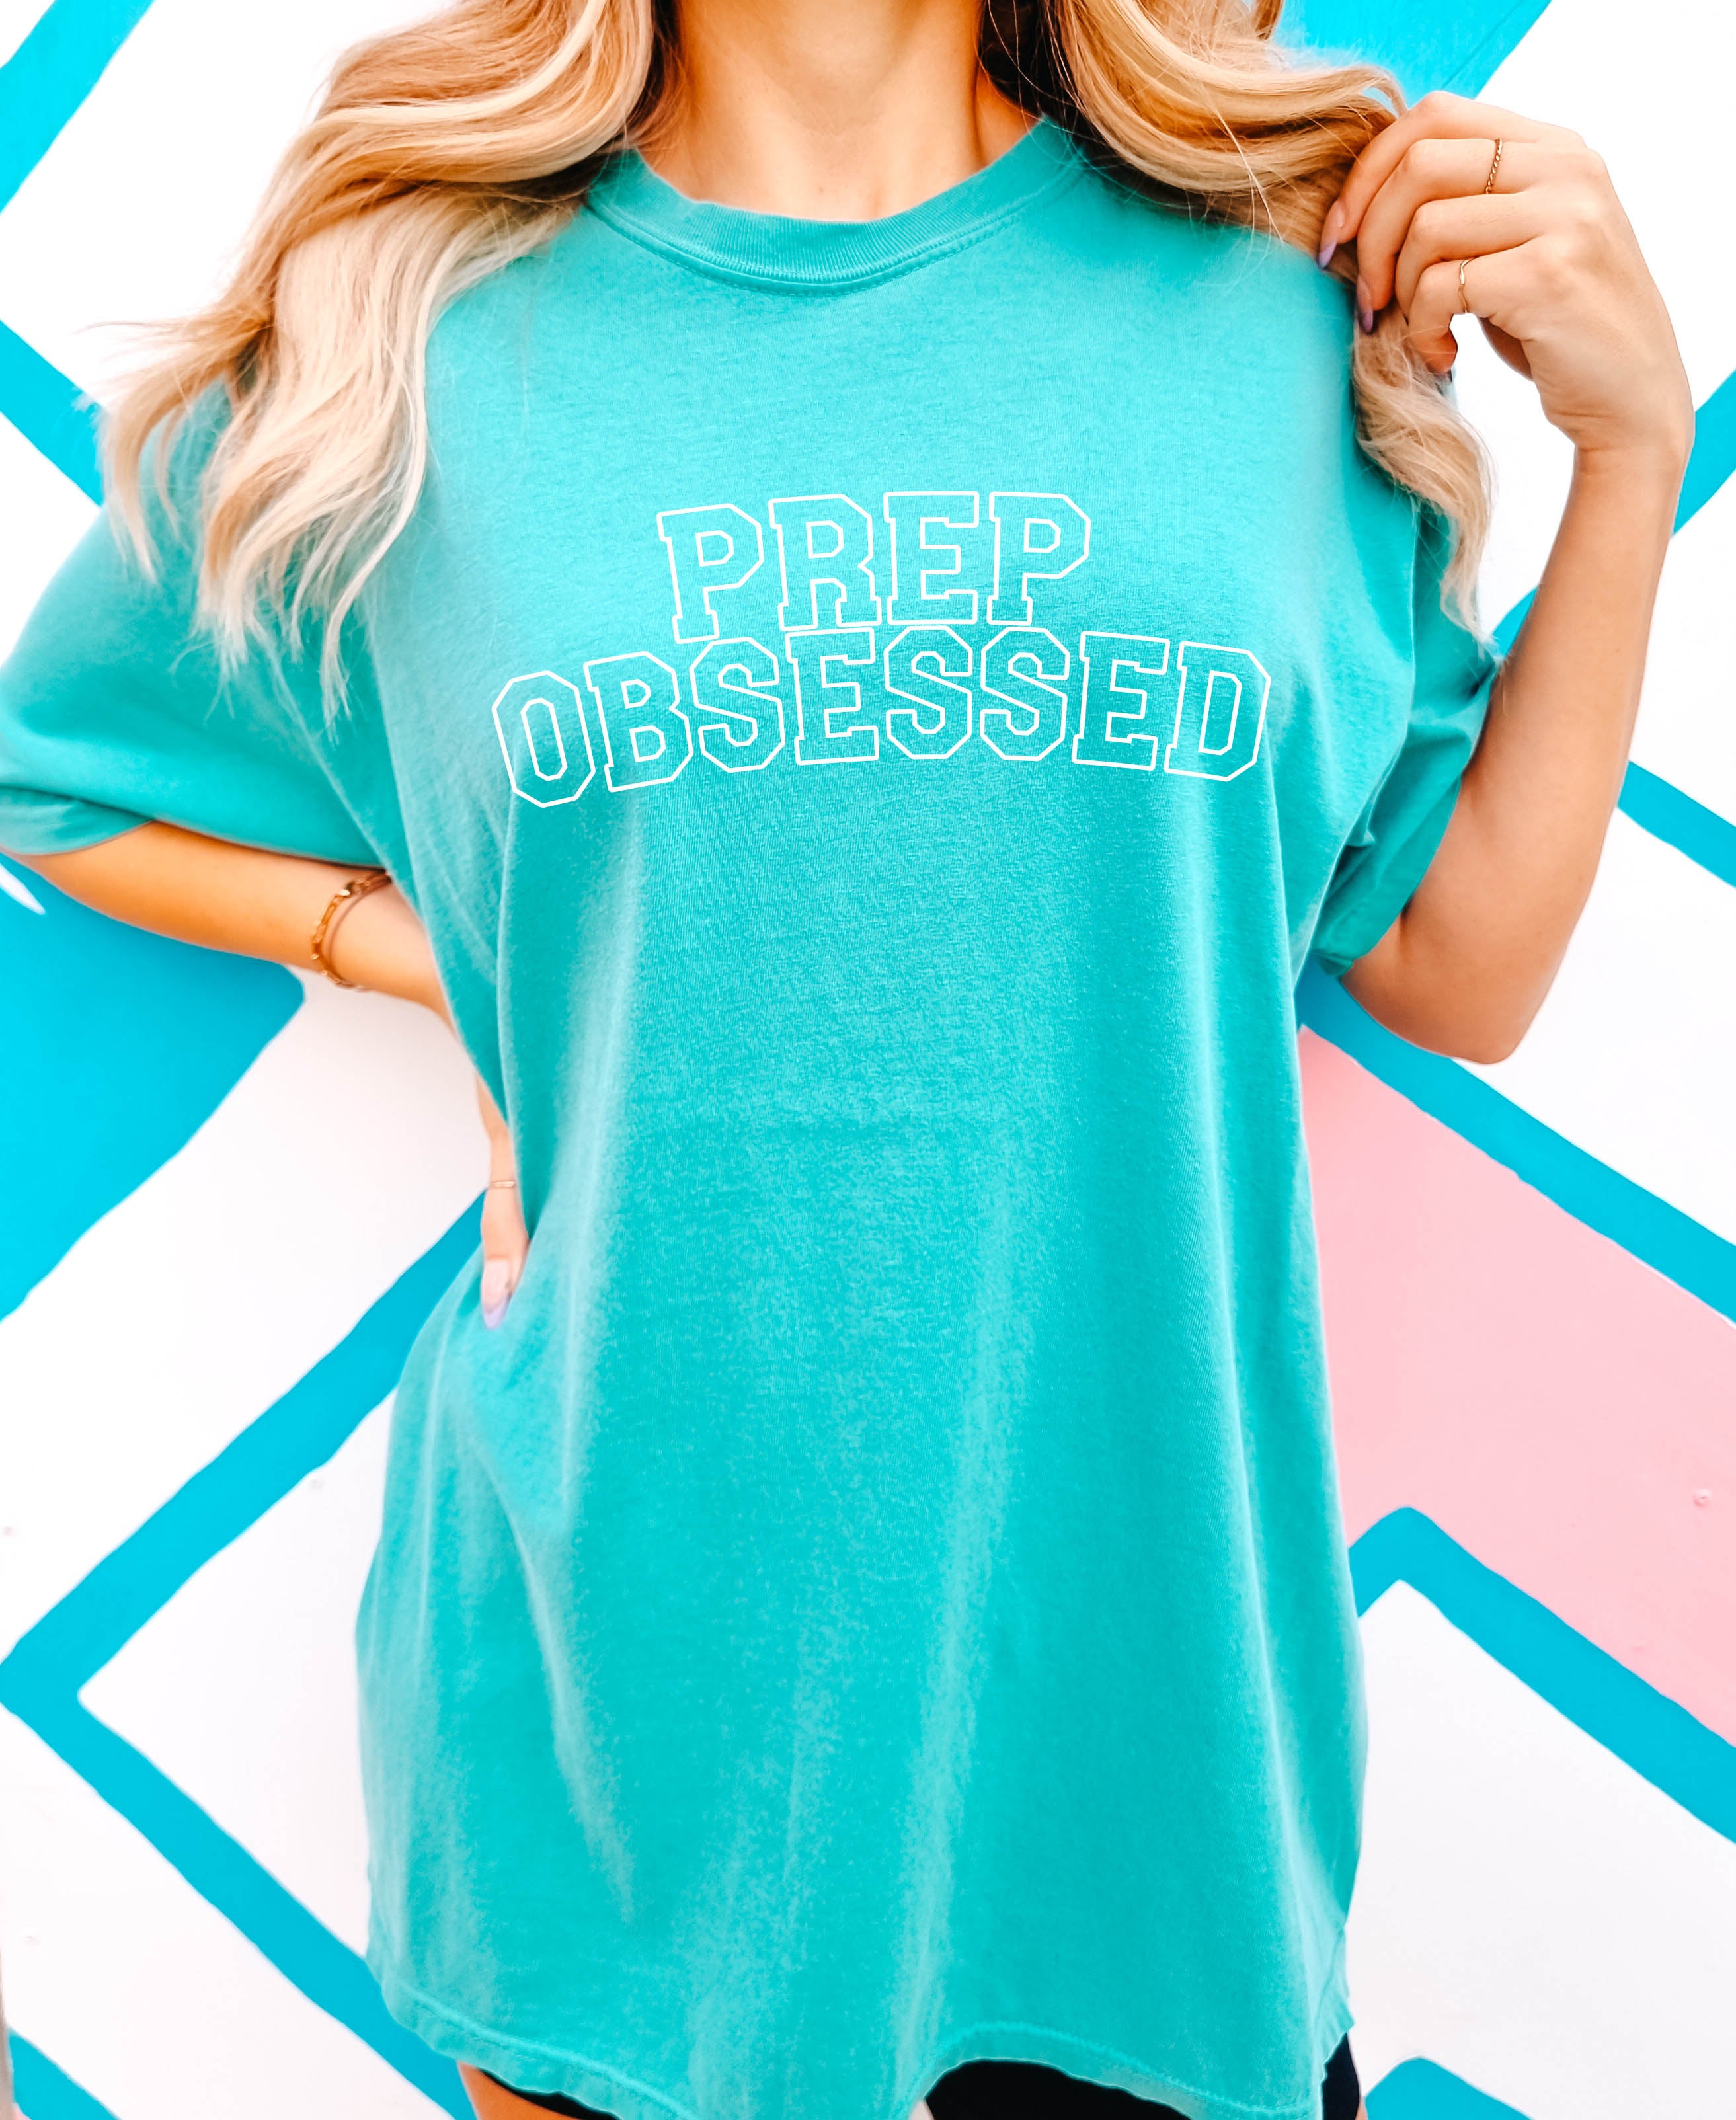 'Prep Obsessed' Varsity Letter Graphic Tee